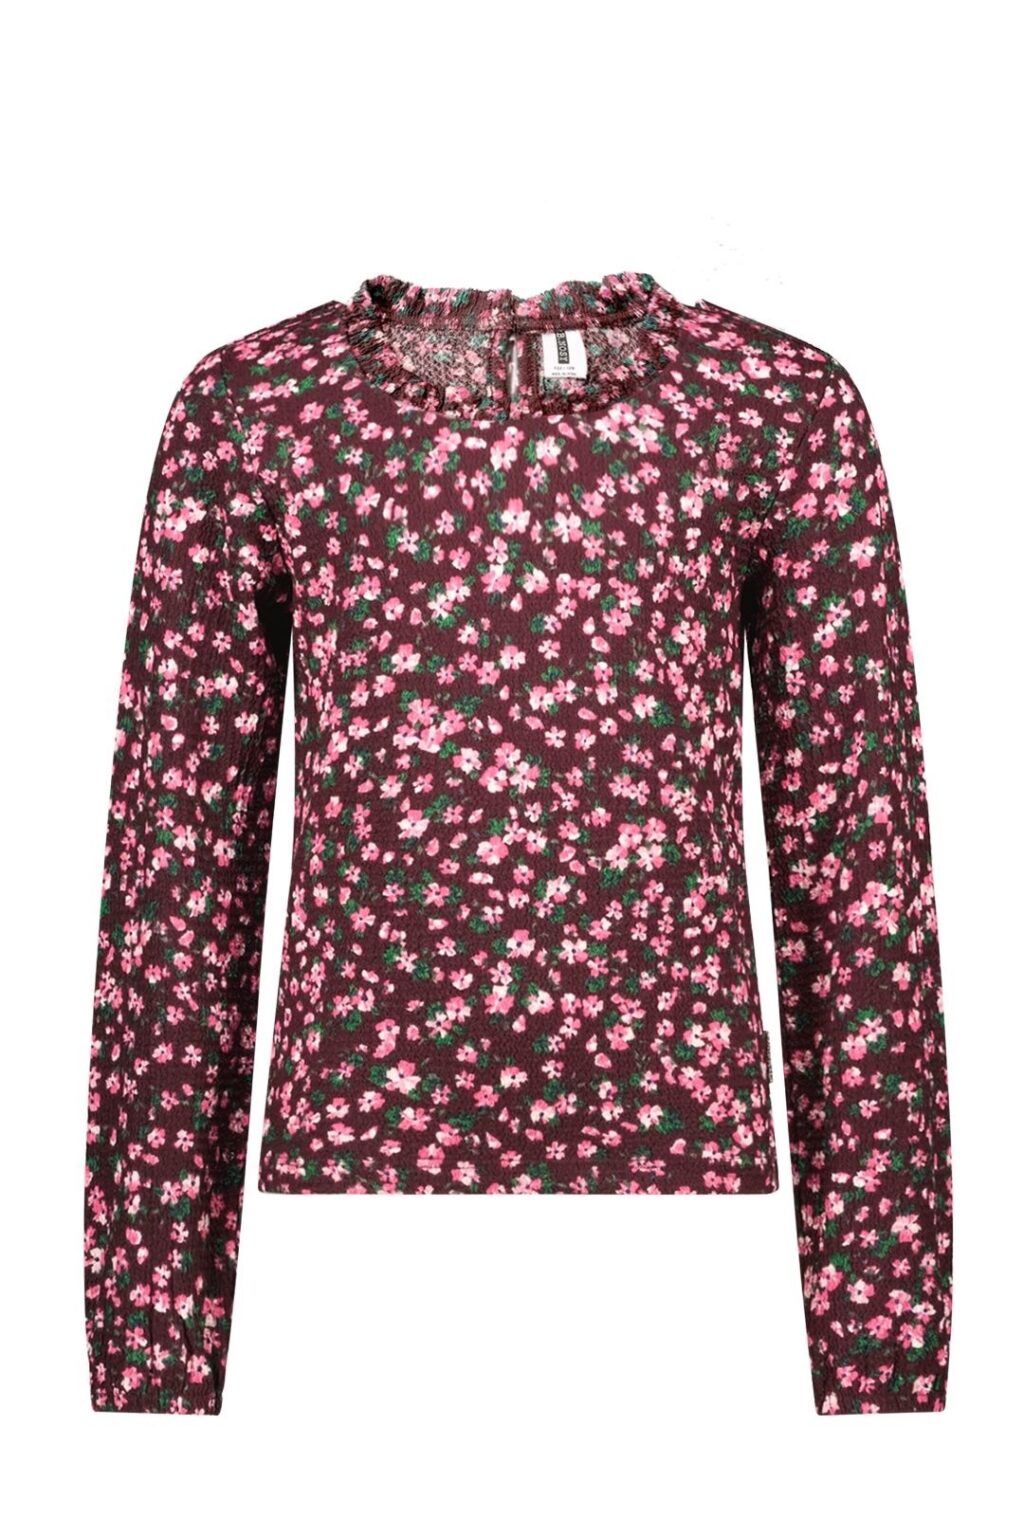 B.Nosy Meisjes blouse roze bloemenprint - Evi - Active paisley ~ Spinze.nl